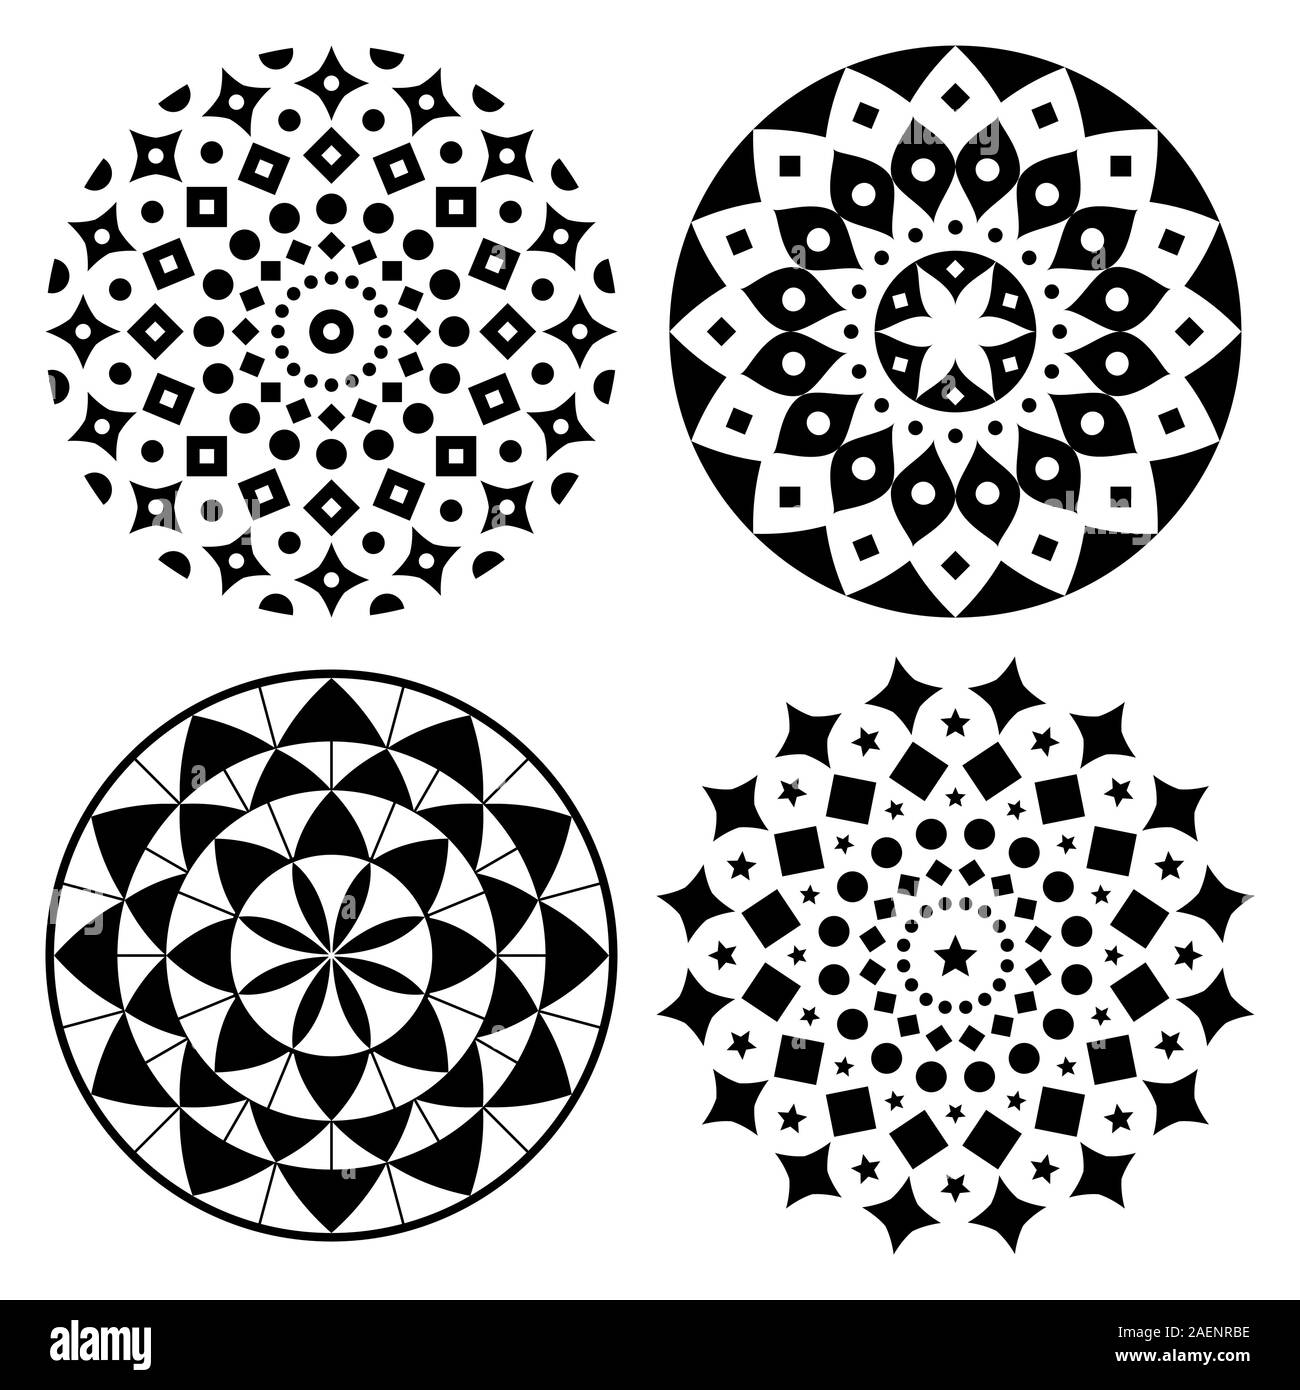 https://c8.alamy.com/comp/2AENRBE/mandala-vector-pattern-set-bohemian-zen-yoga-design-asian-ethnic-design-in-black-and-white-2AENRBE.jpg